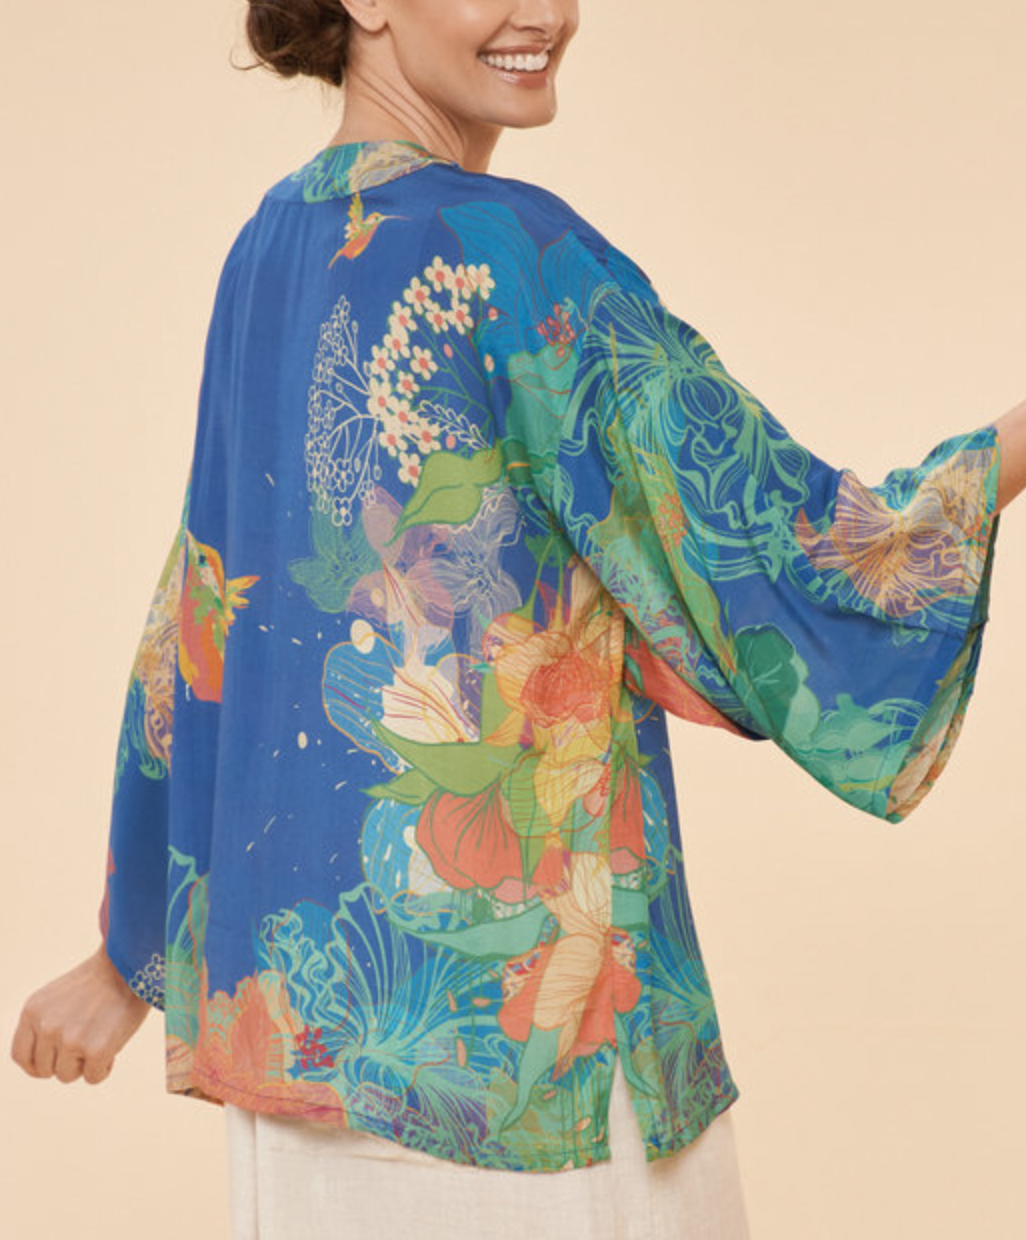 Kimono Jacket by Powder Ltd.